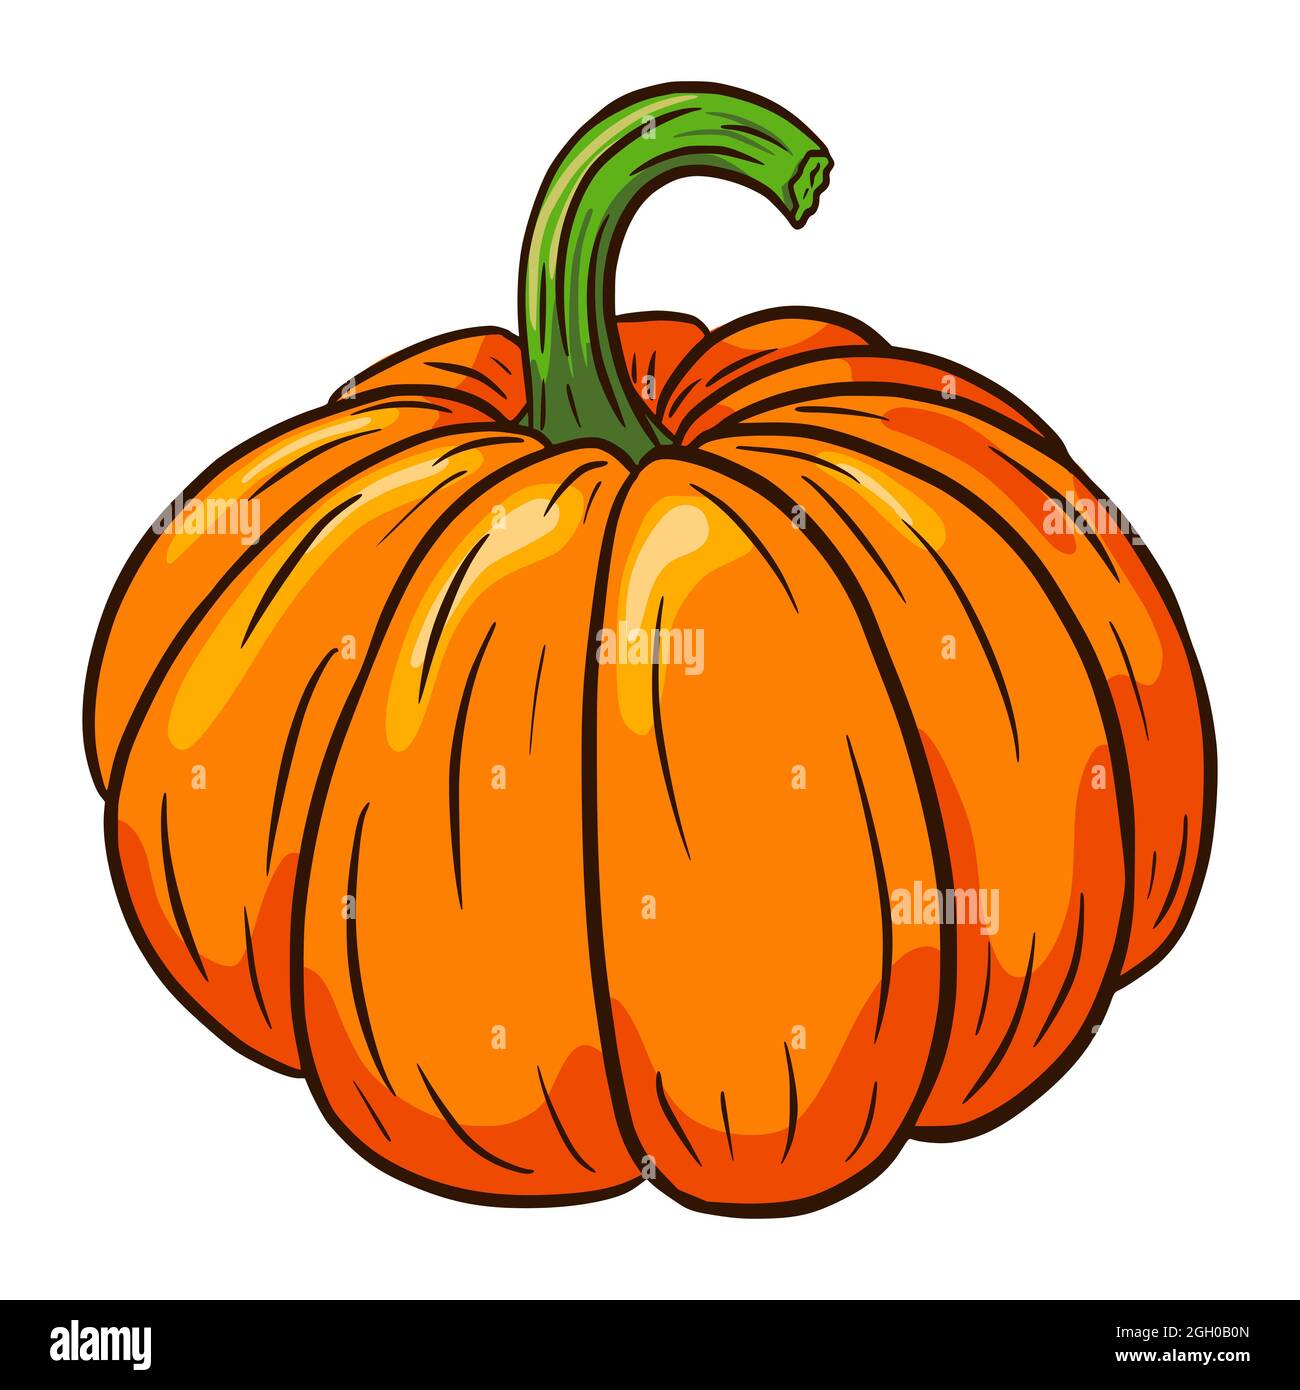 Pumpkin Illustration. Autumn Food Icon. Ripe squash sketch. Element for autumn decorative design, halloween invitation, harvest, sticker, logo, menu, recipe Stock Vector